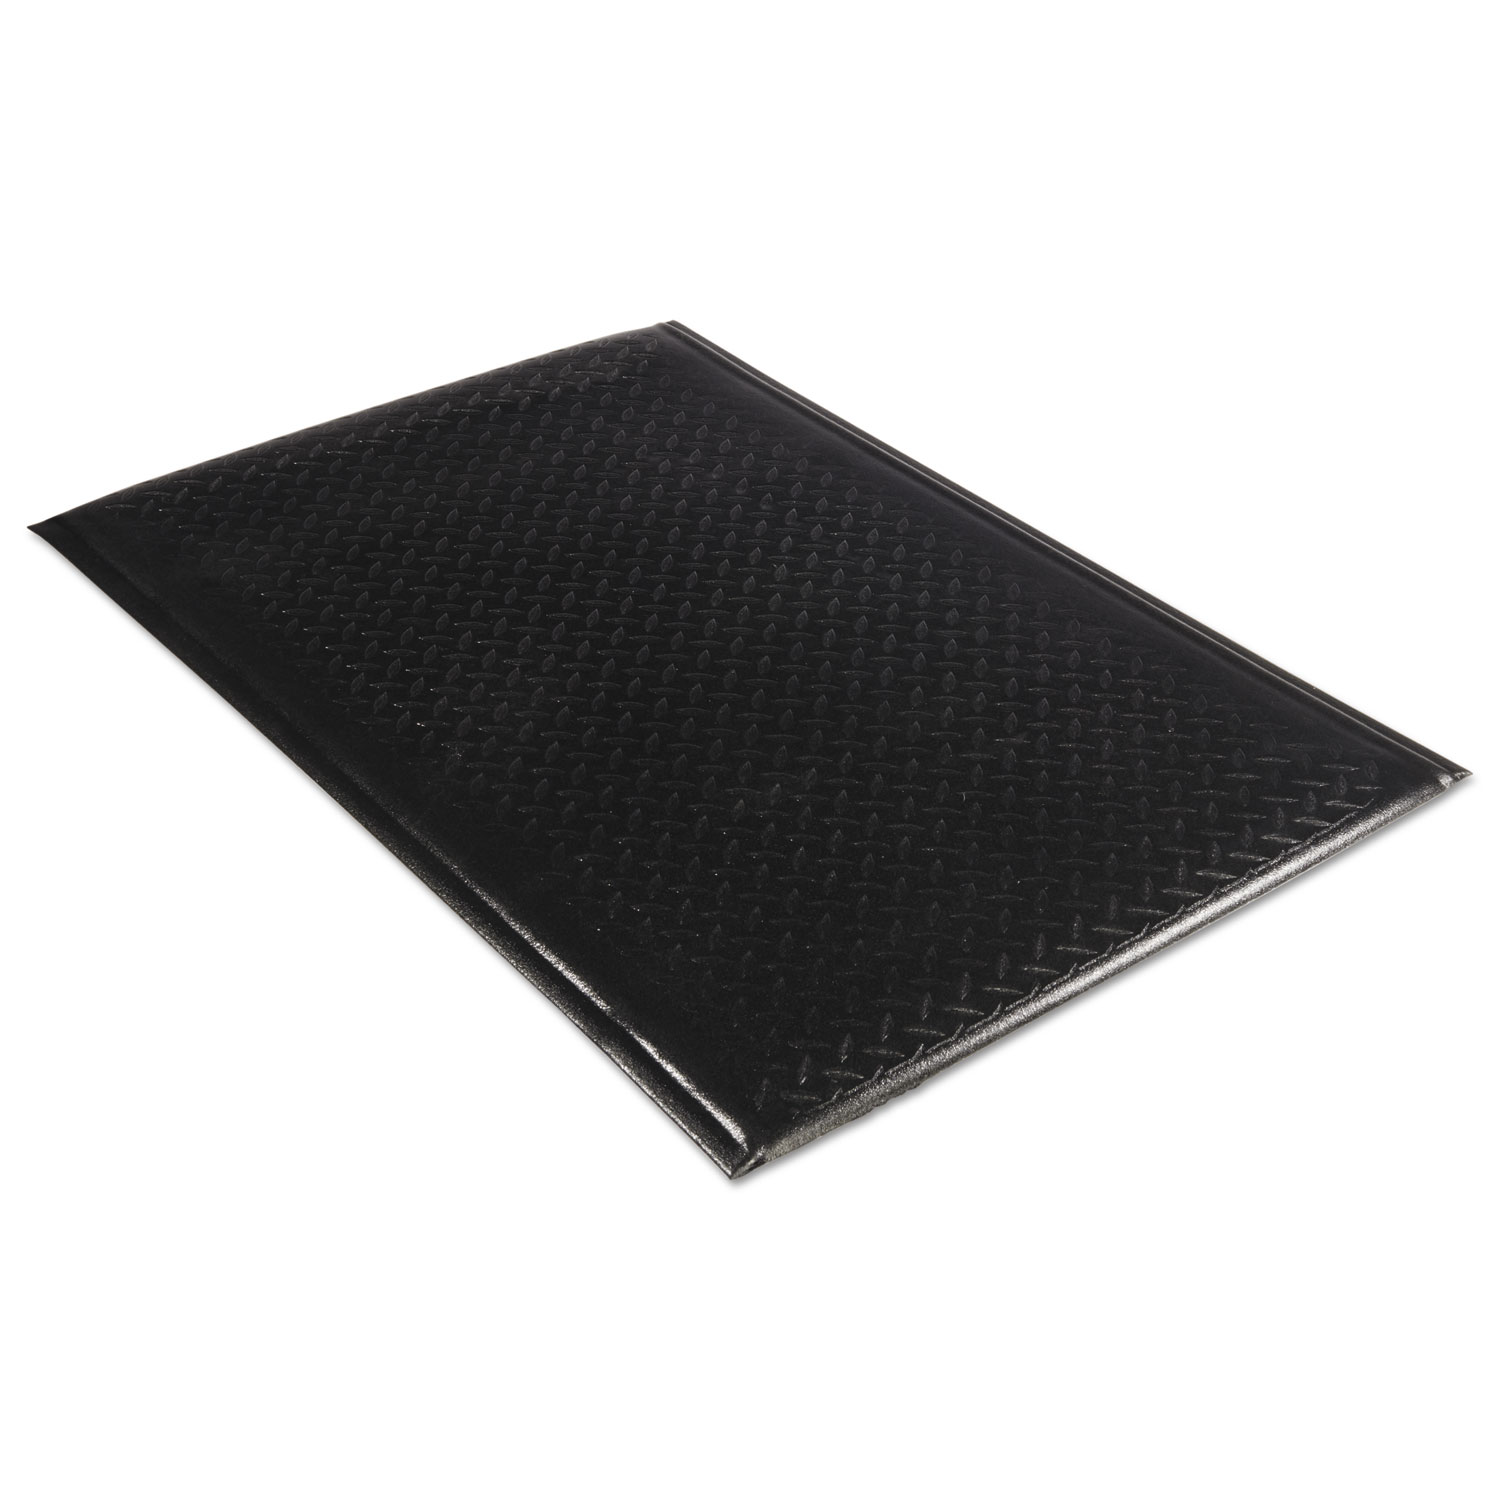  Guardian 24020301DIAM Soft Step Supreme Anti-Fatigue Floor Mat, 24 x 36, Black (MLL24020301DIAM) 